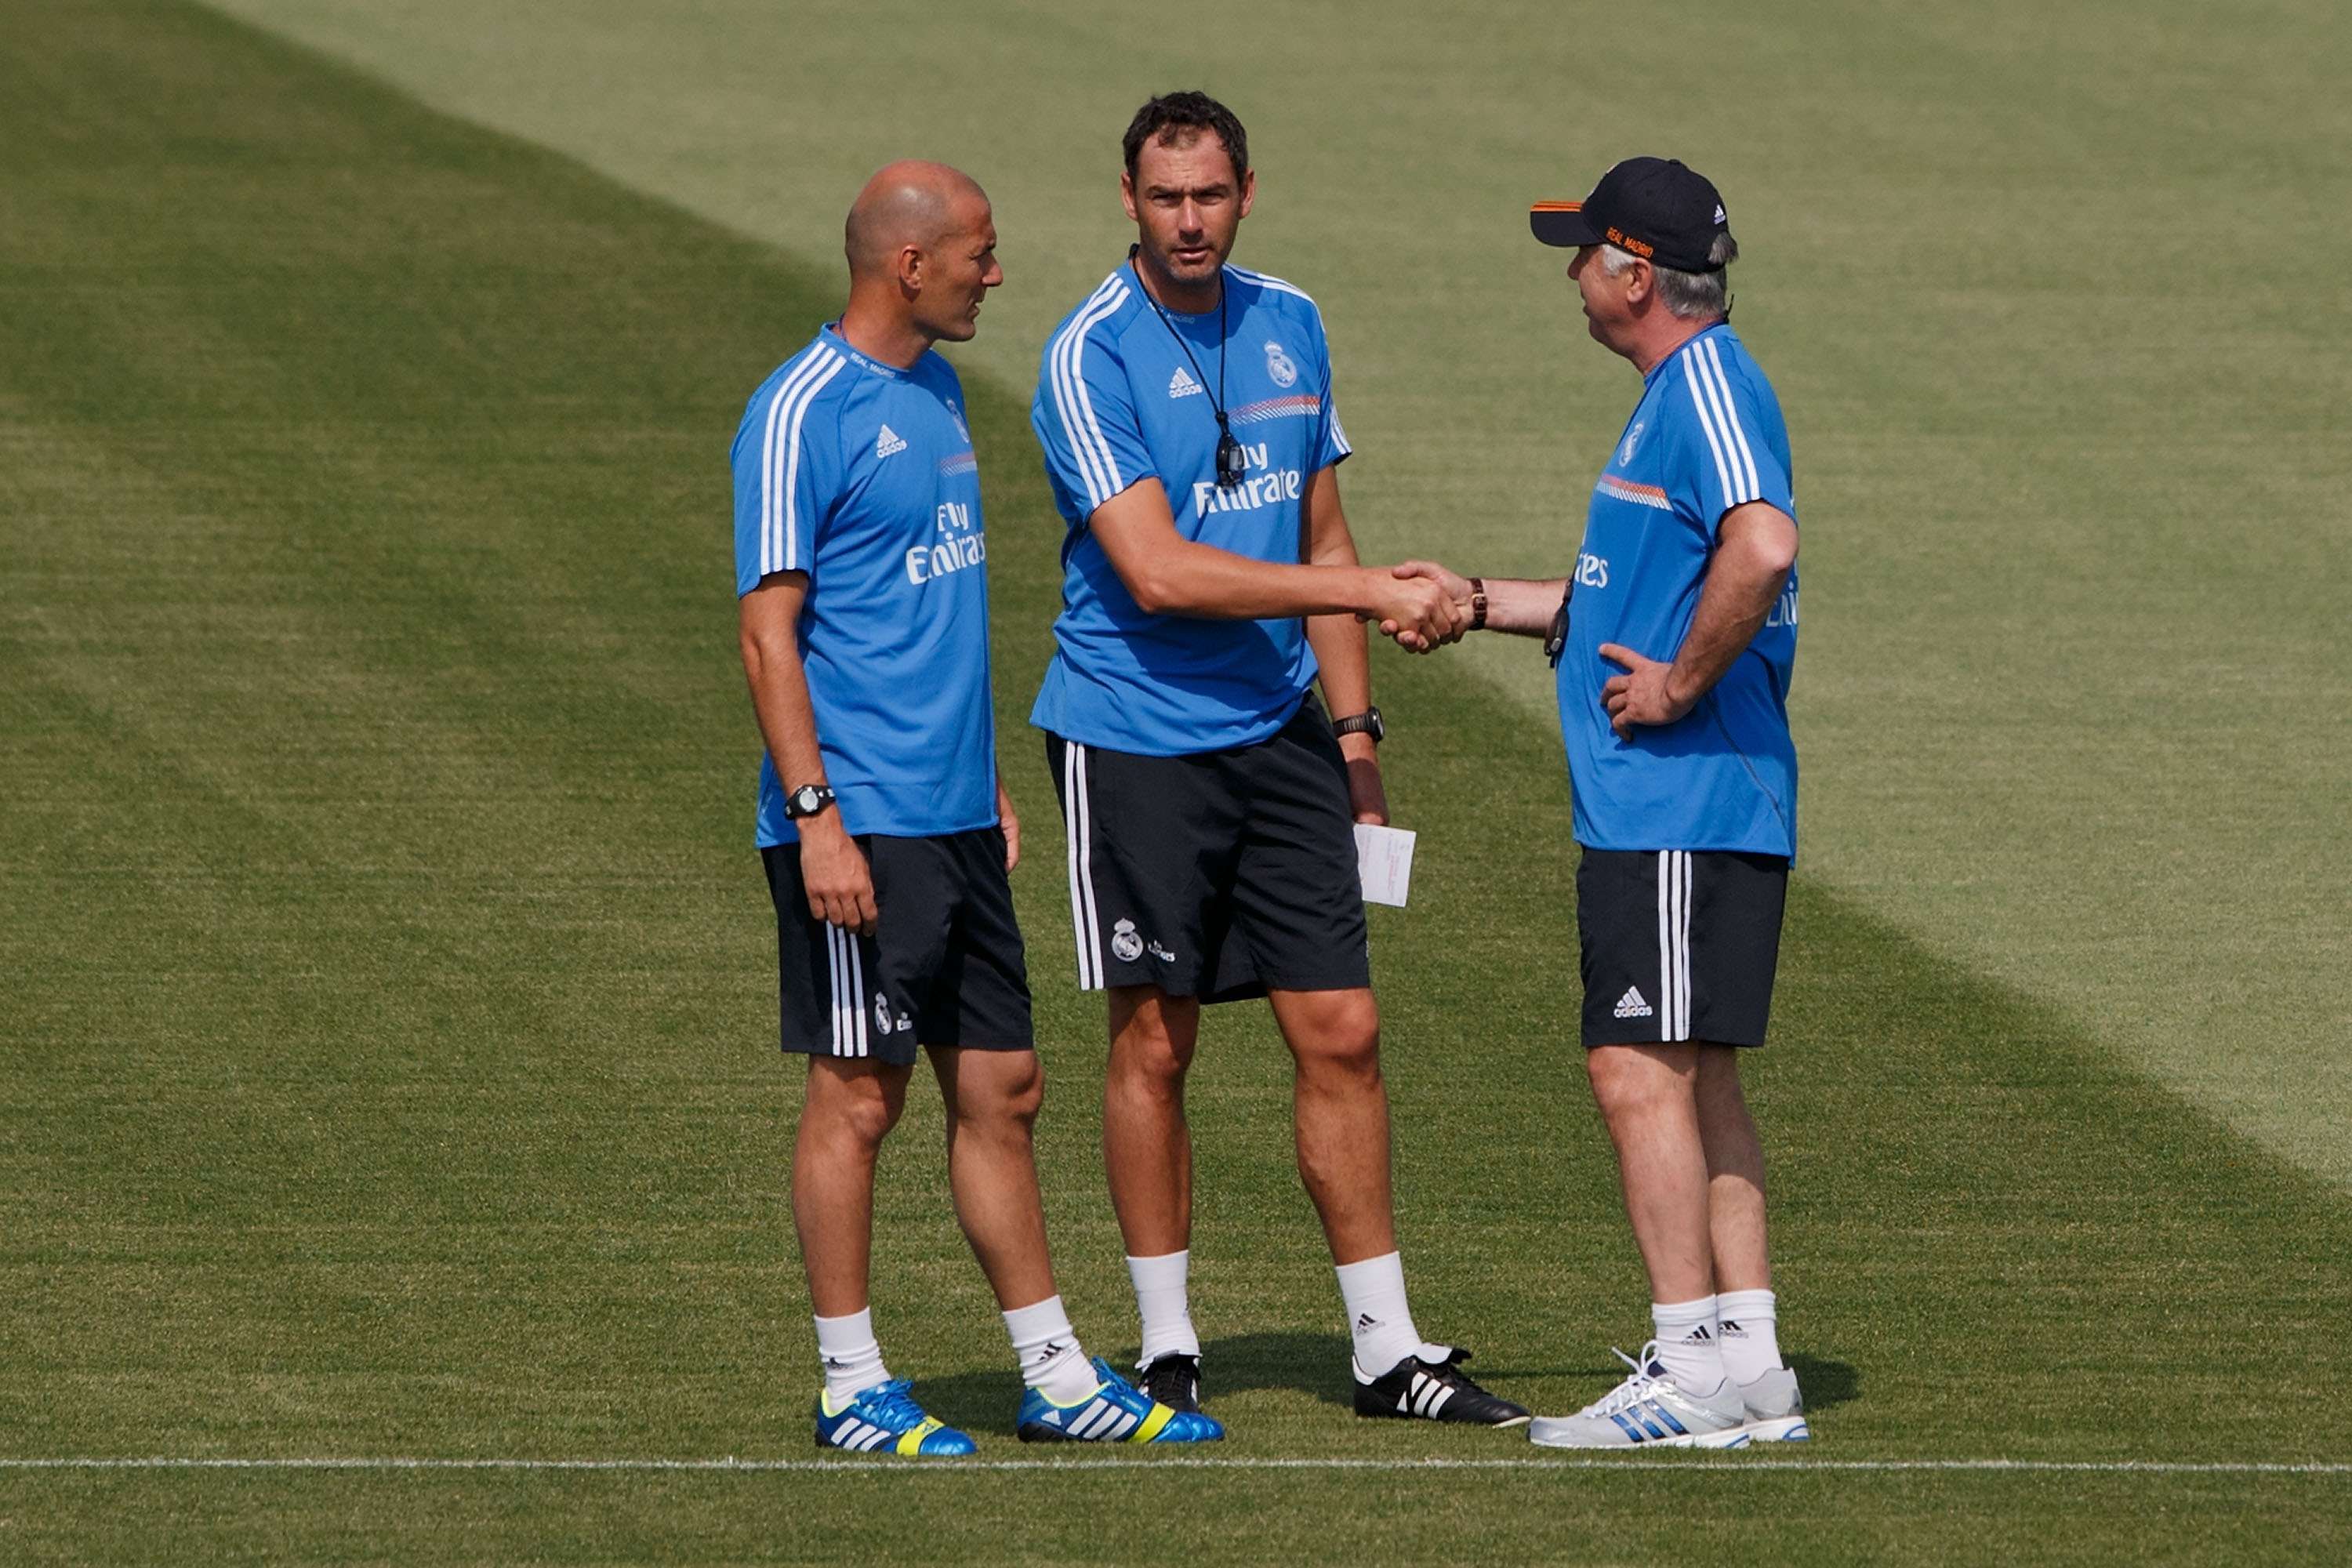 Carlo Ancelotti, Zinedine Zidane and Paul Clement, the Real Madrid coaches